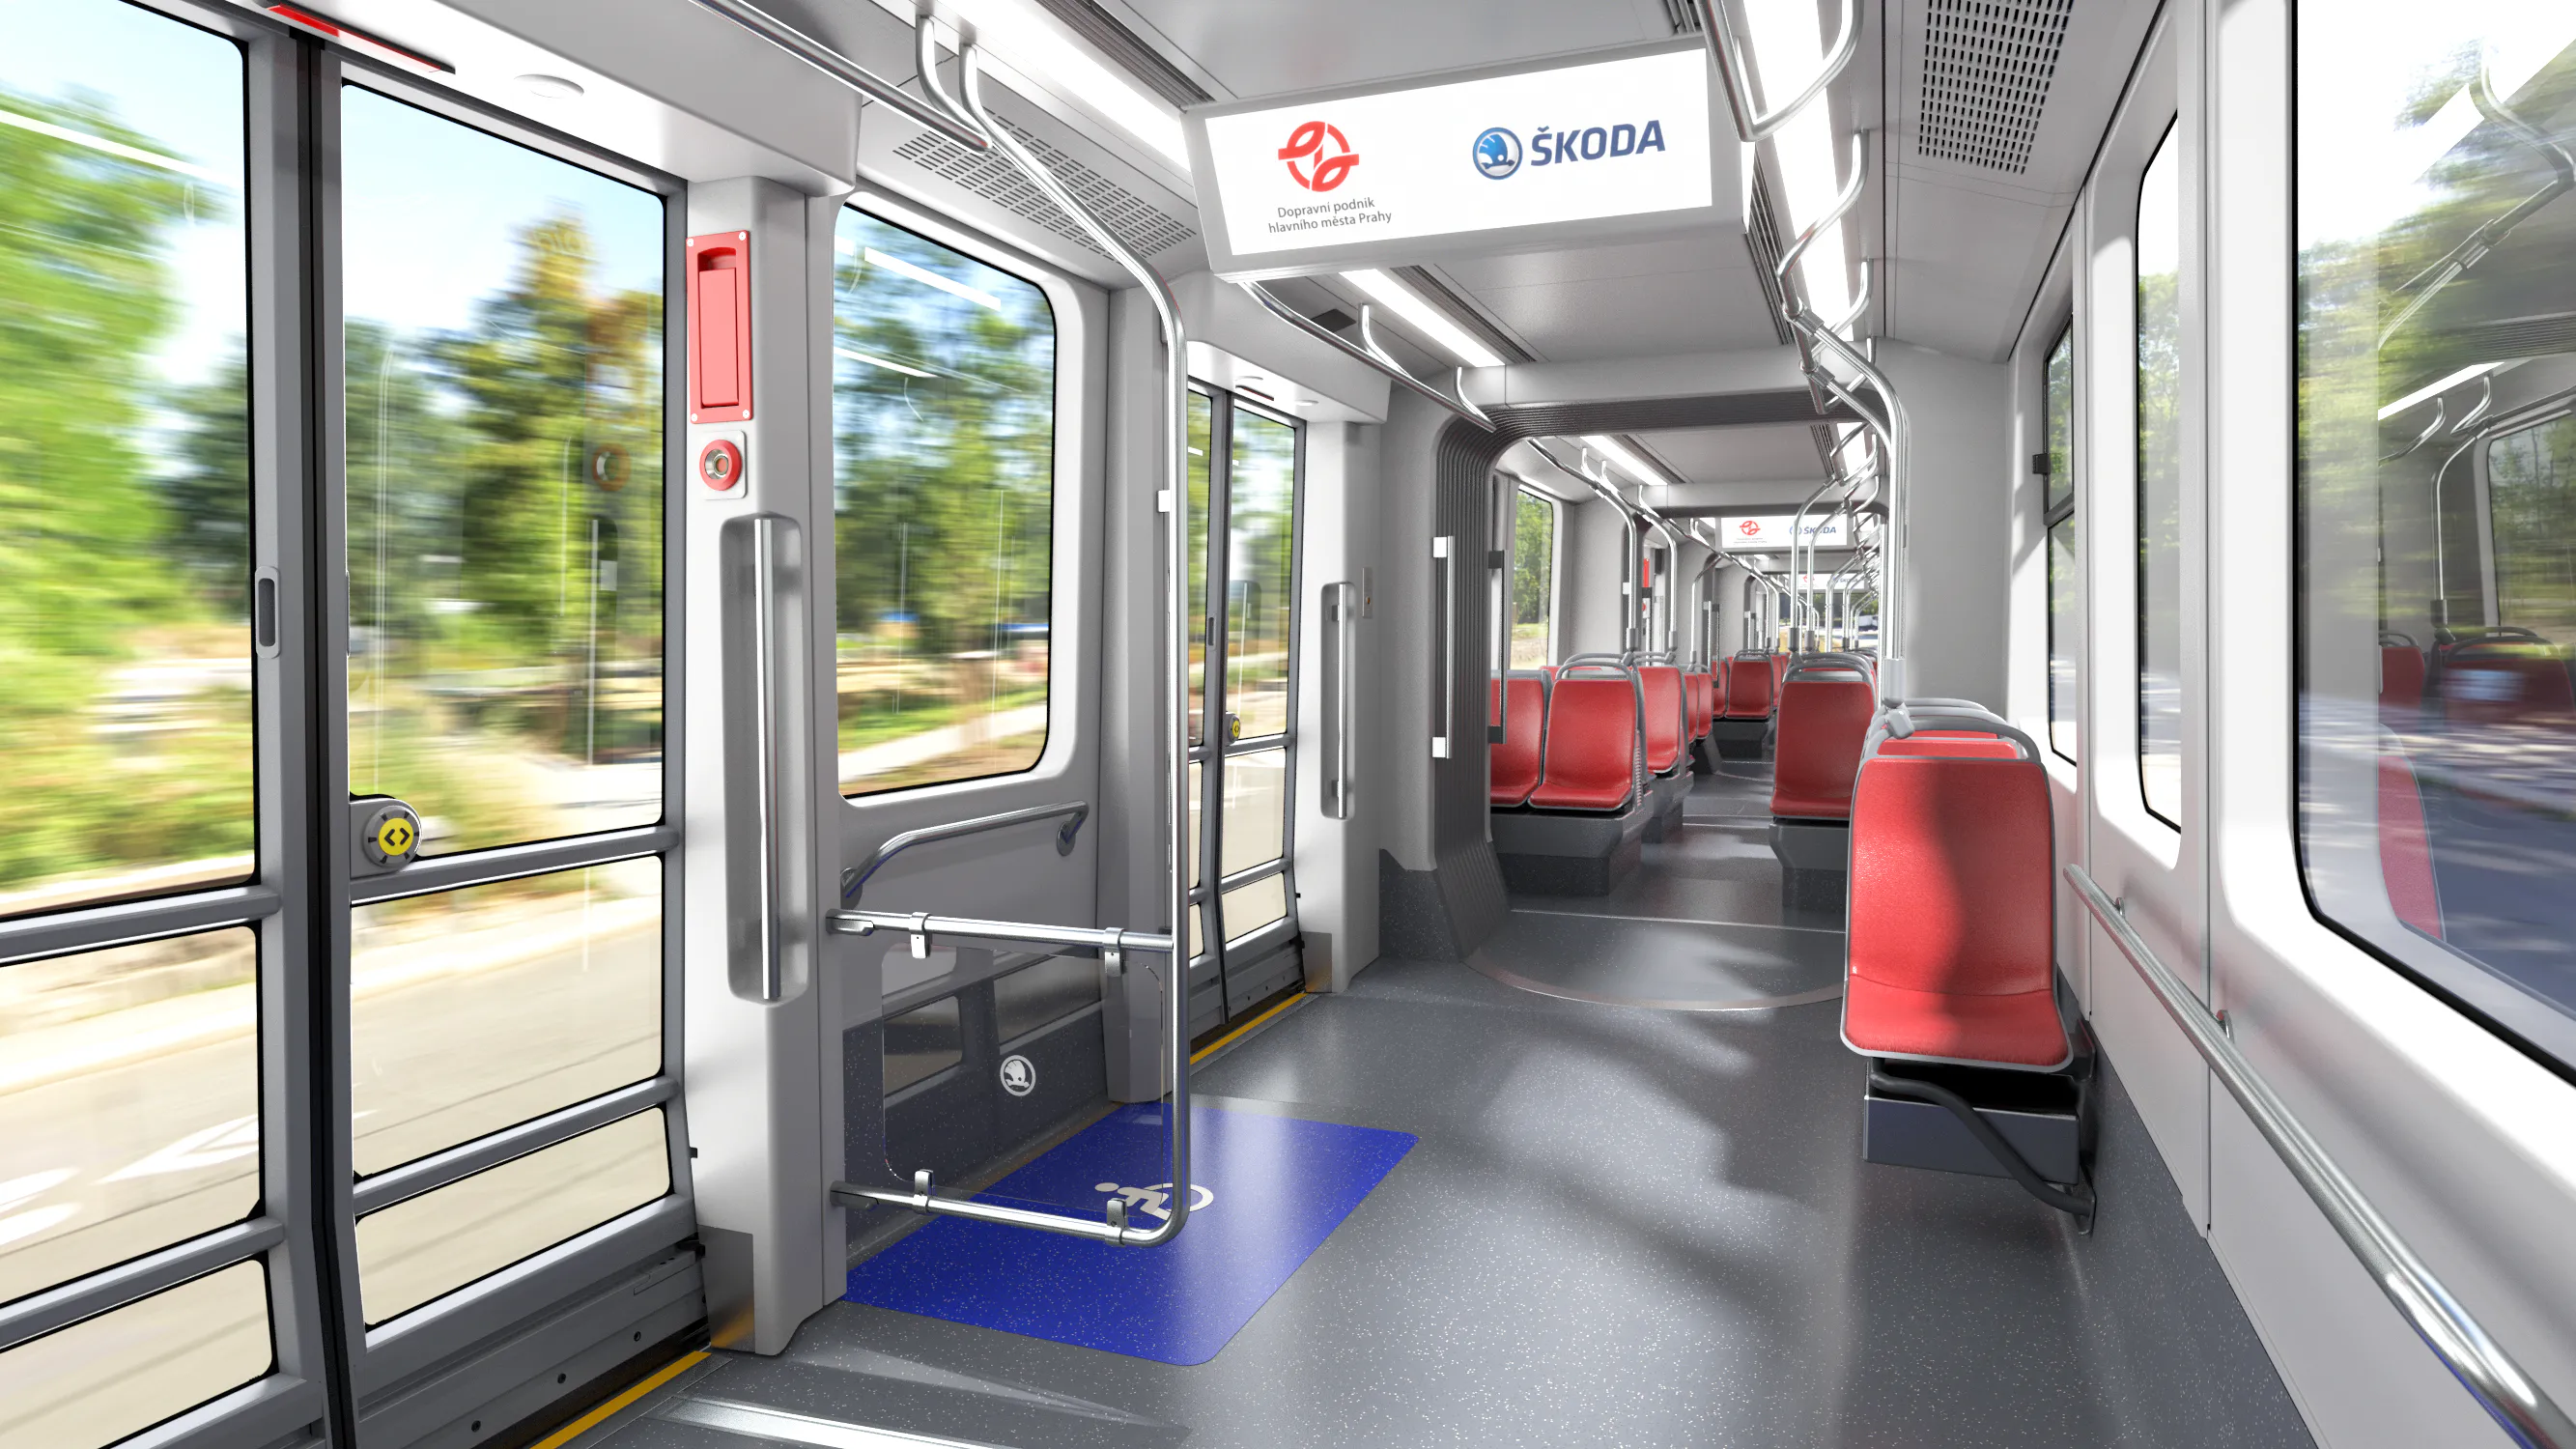 The 3D model of the interior of the future Skoda tram for Praha